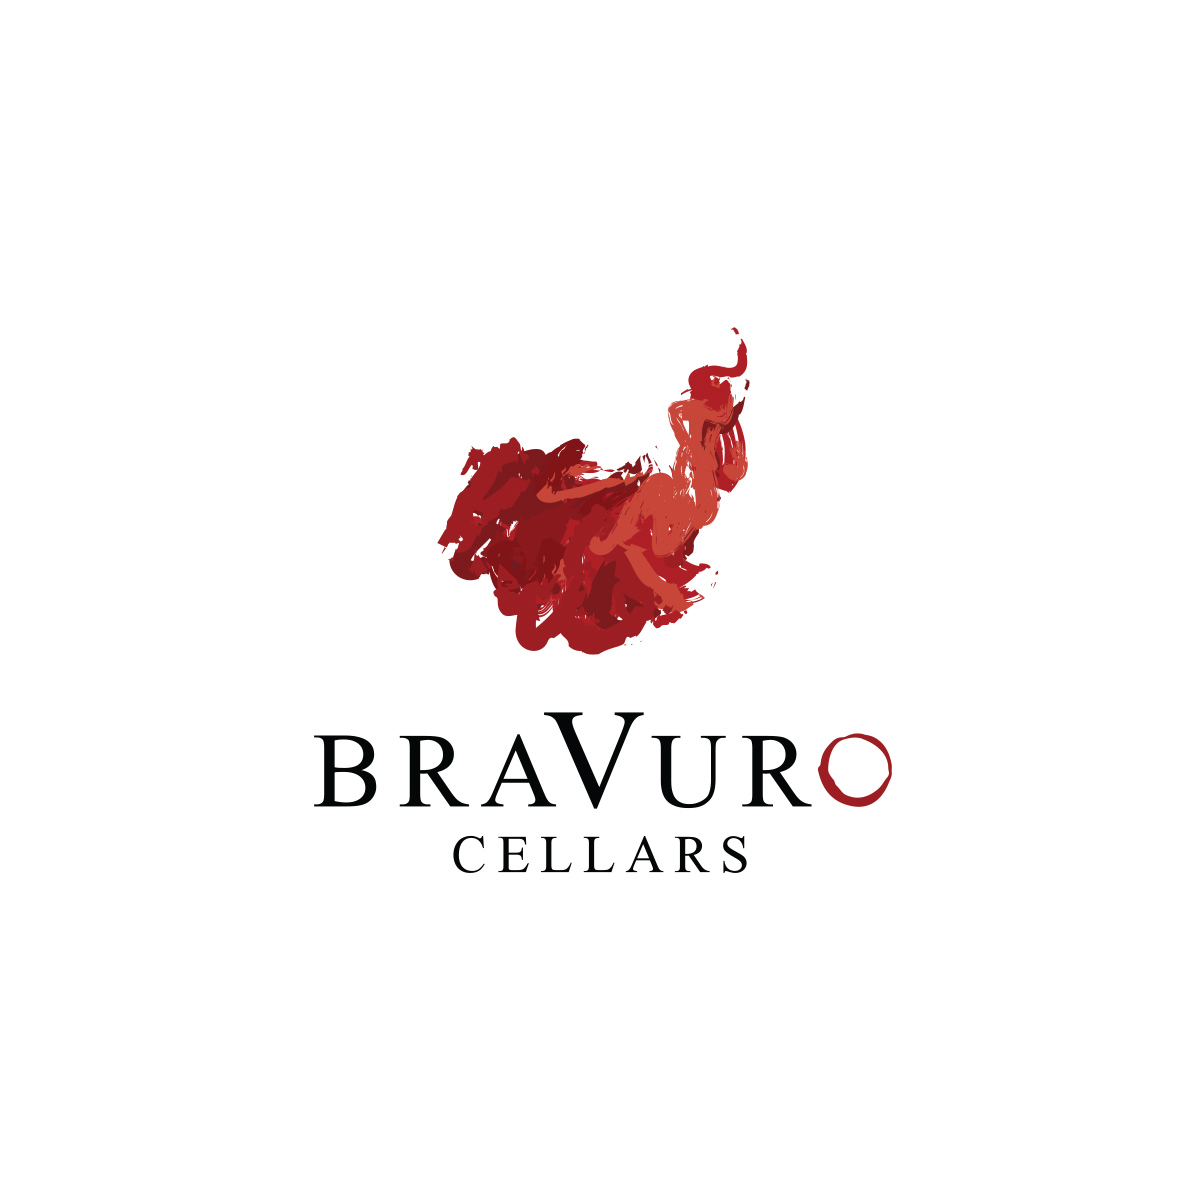 Bravuro Cellars Vineyard & Tasting Room